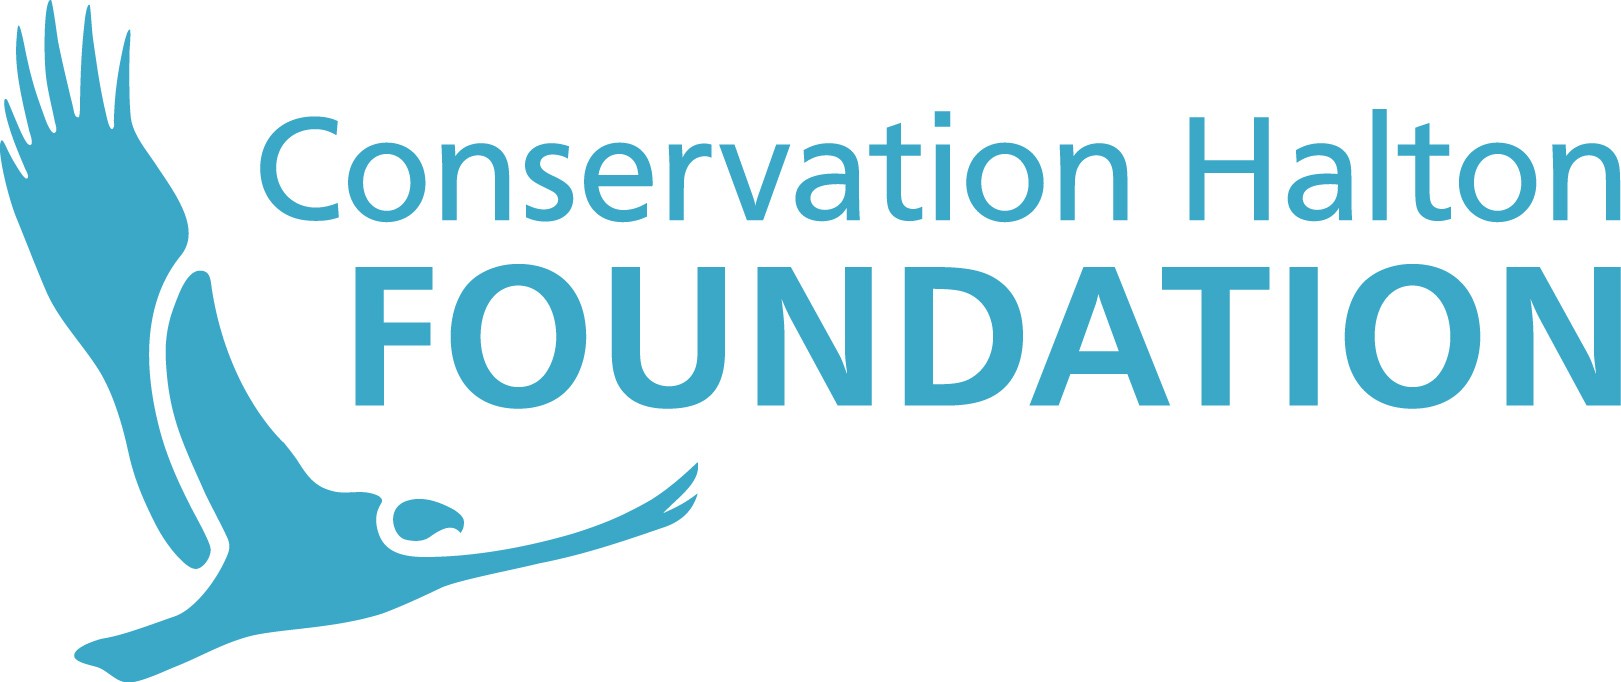 Conservation Halton Foundation logo